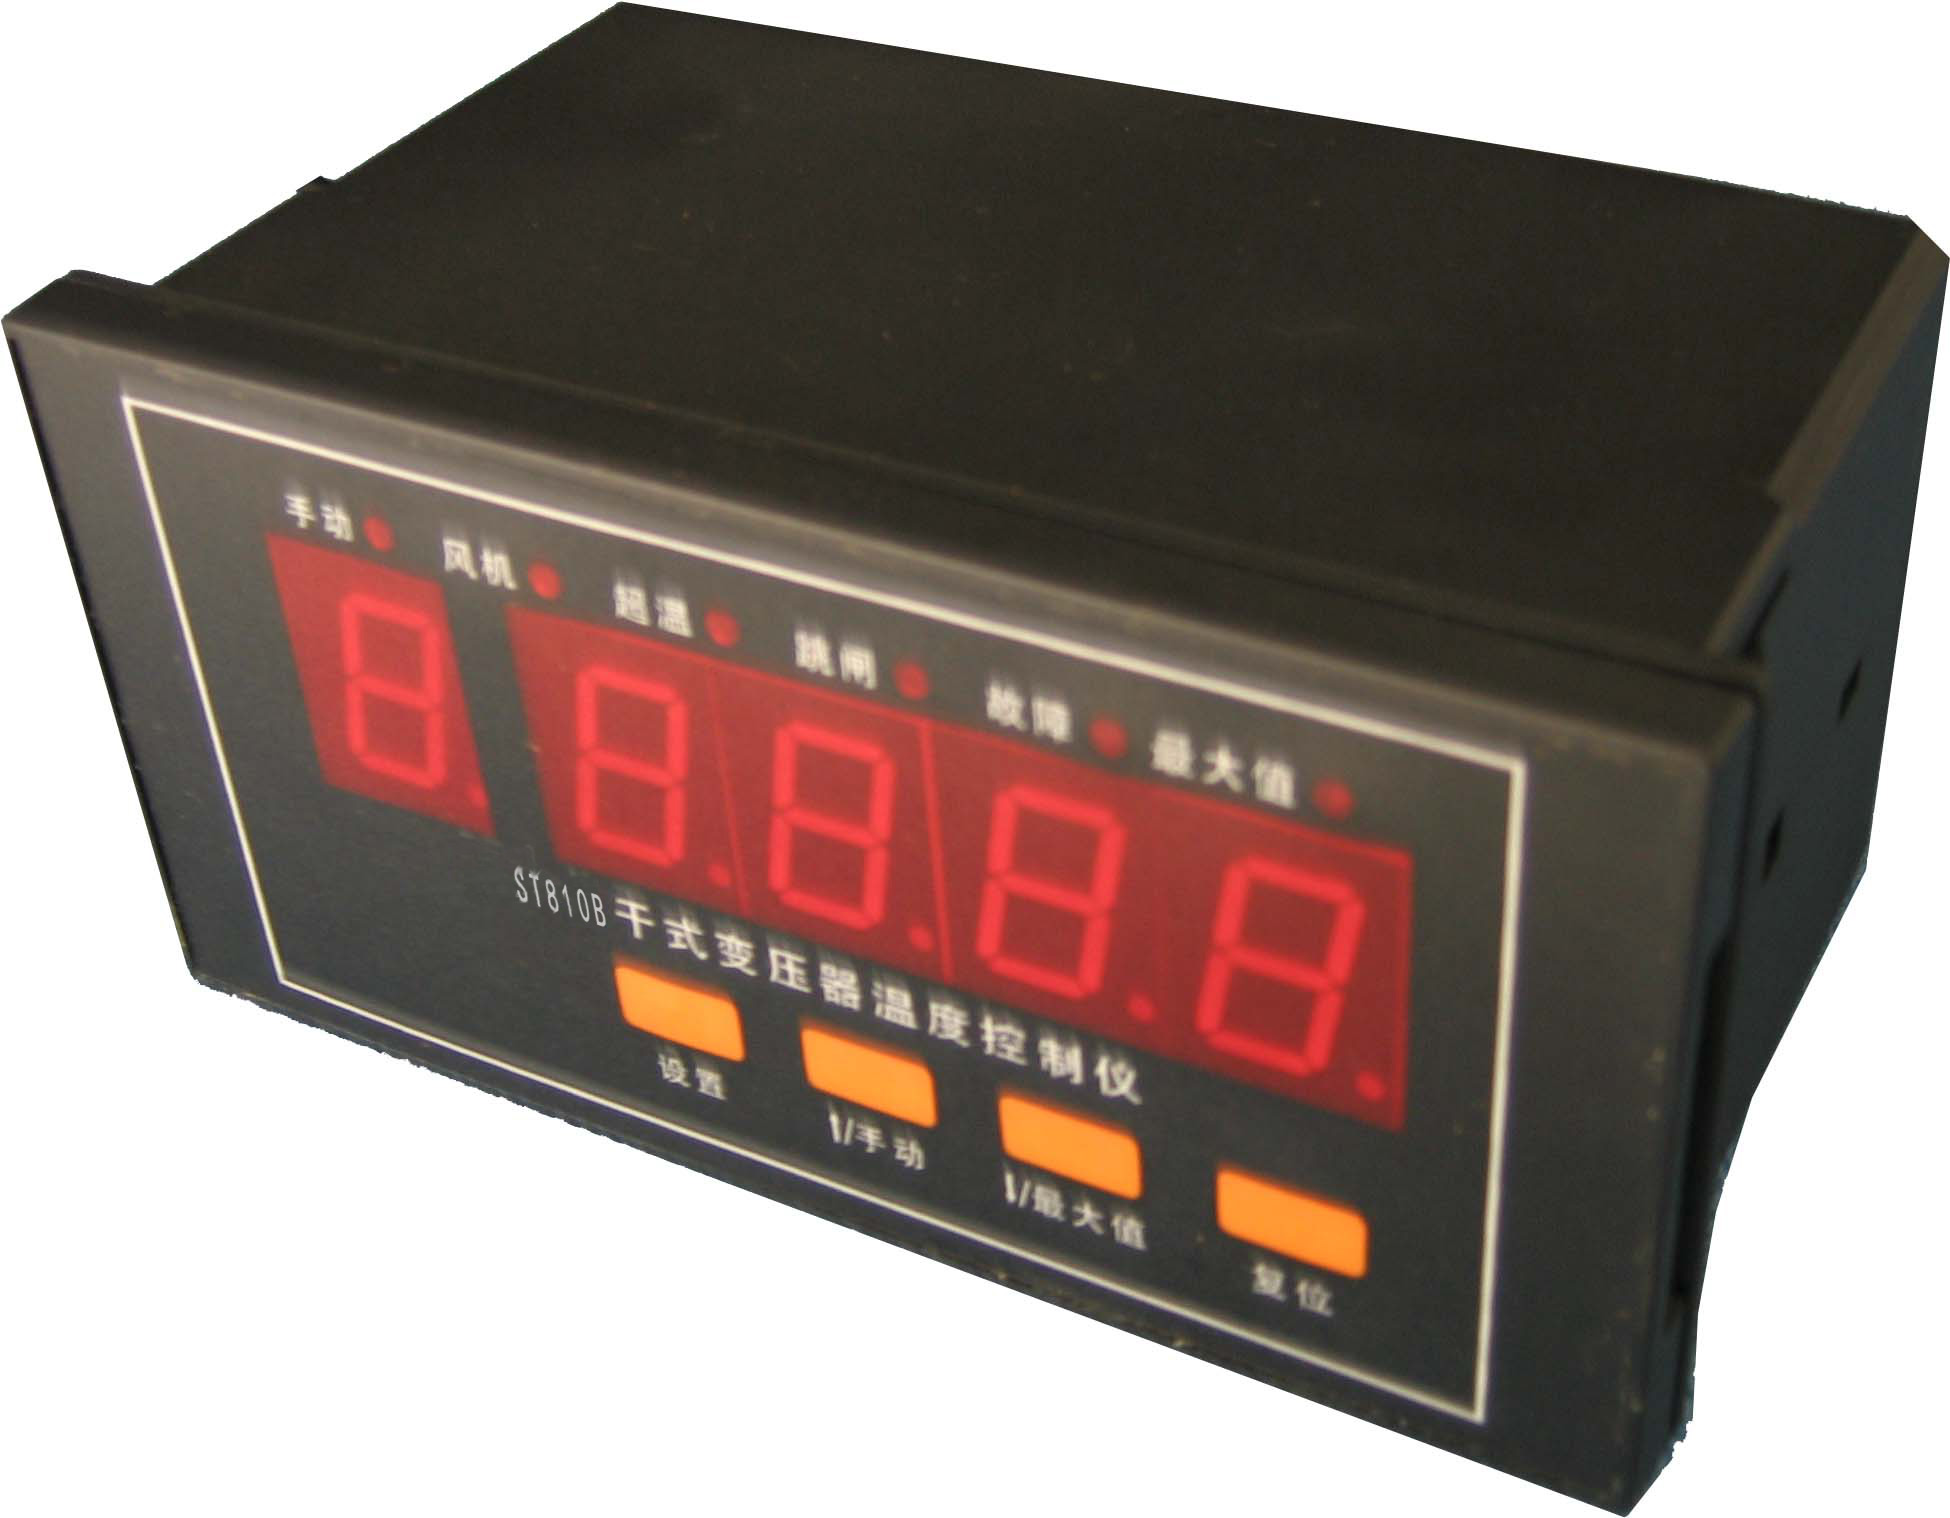 ST810B,ST810B干式变压器温控仪